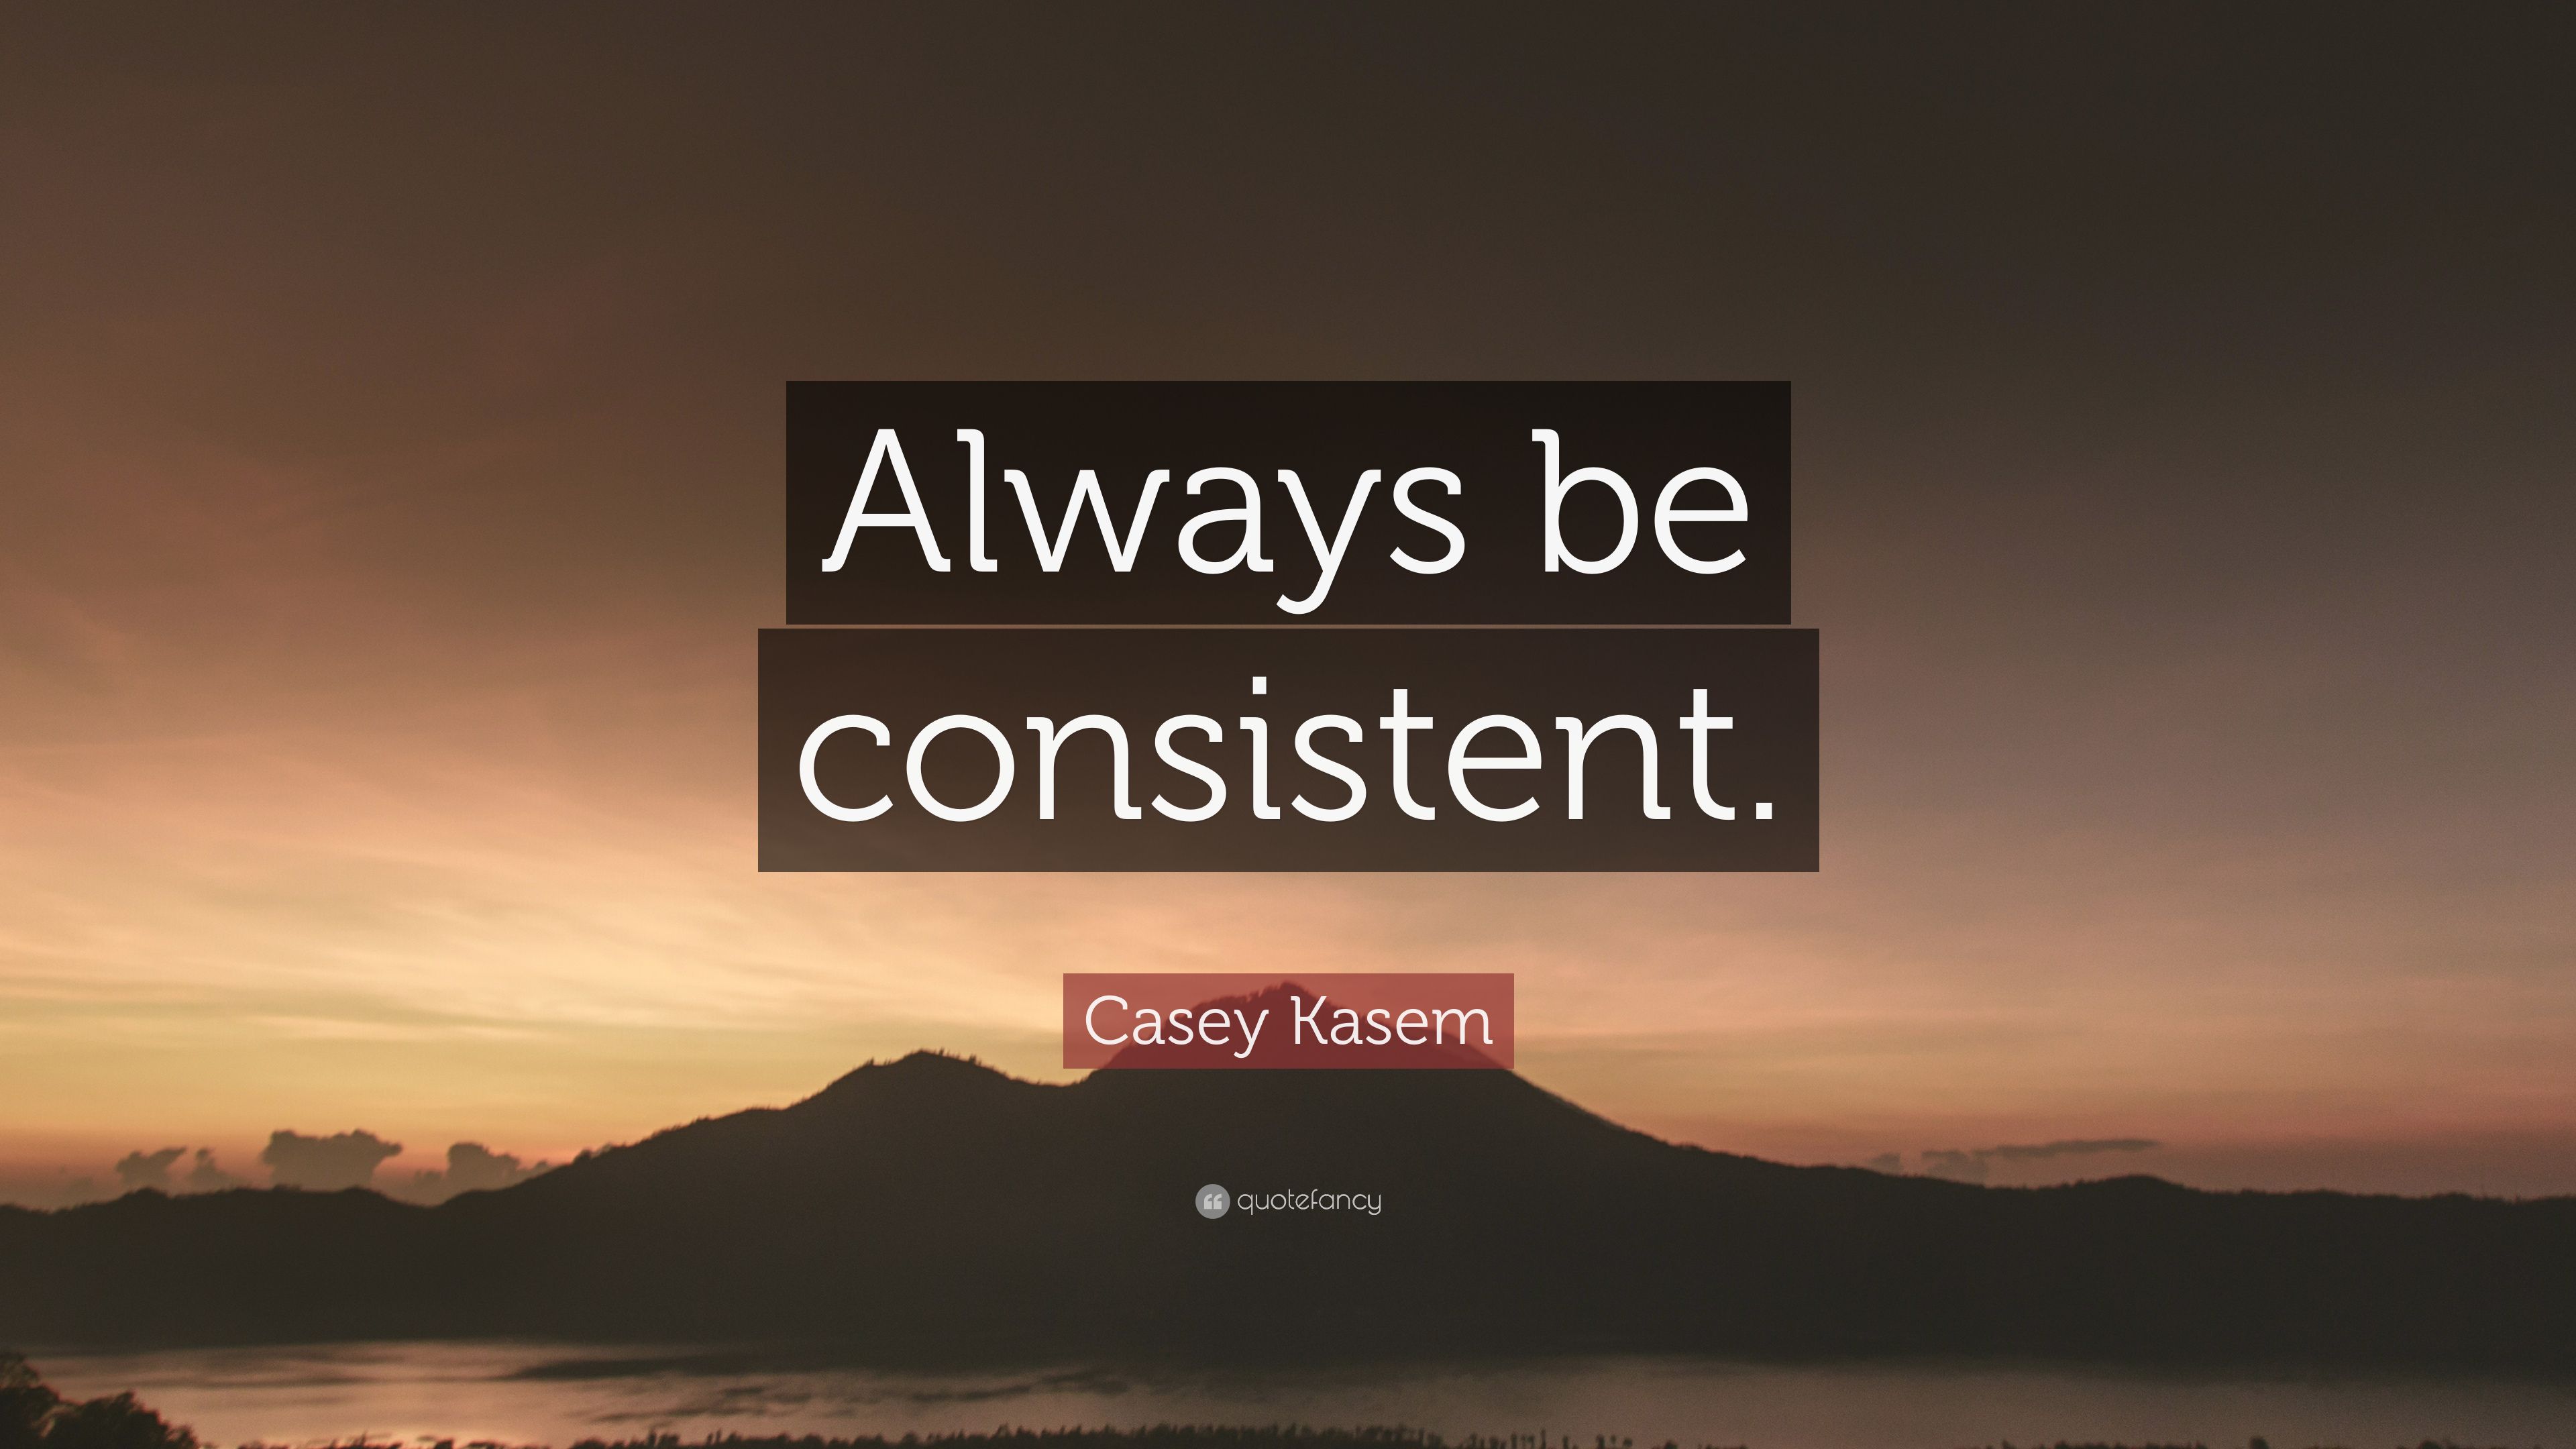 Casey Kasem Quote: “Always be .quotefancy.com